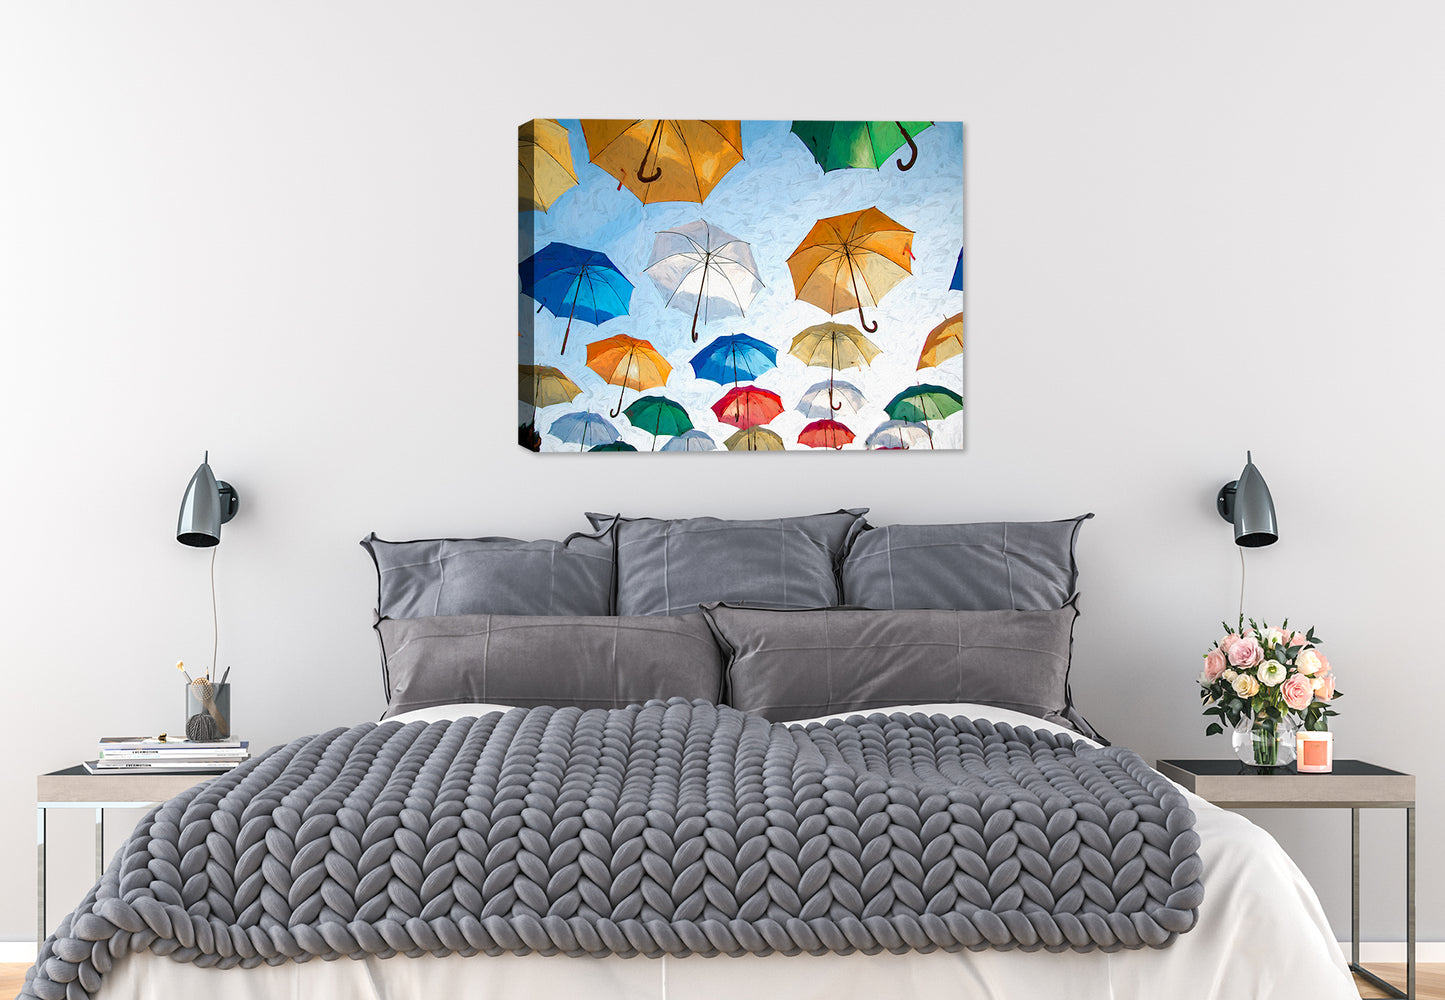 Sunny Day Umbrellas - Fine Art Painting